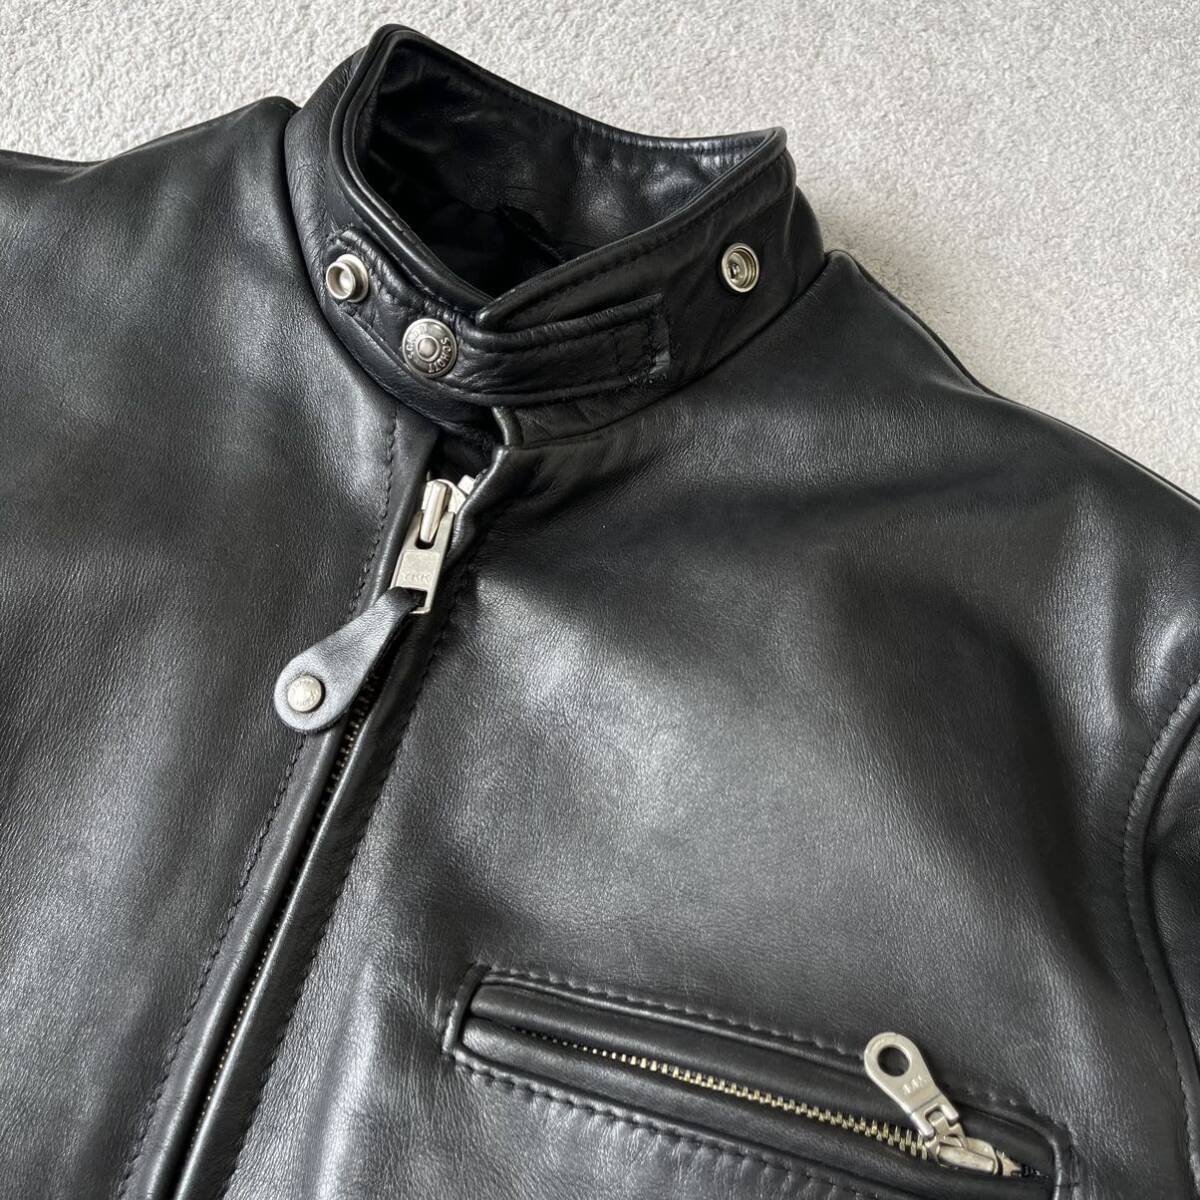  beautiful goods * Schott Schott 141 leather jacket Single Rider's boa liner 2WAYkau hyde black black USA made leather jacket outer 